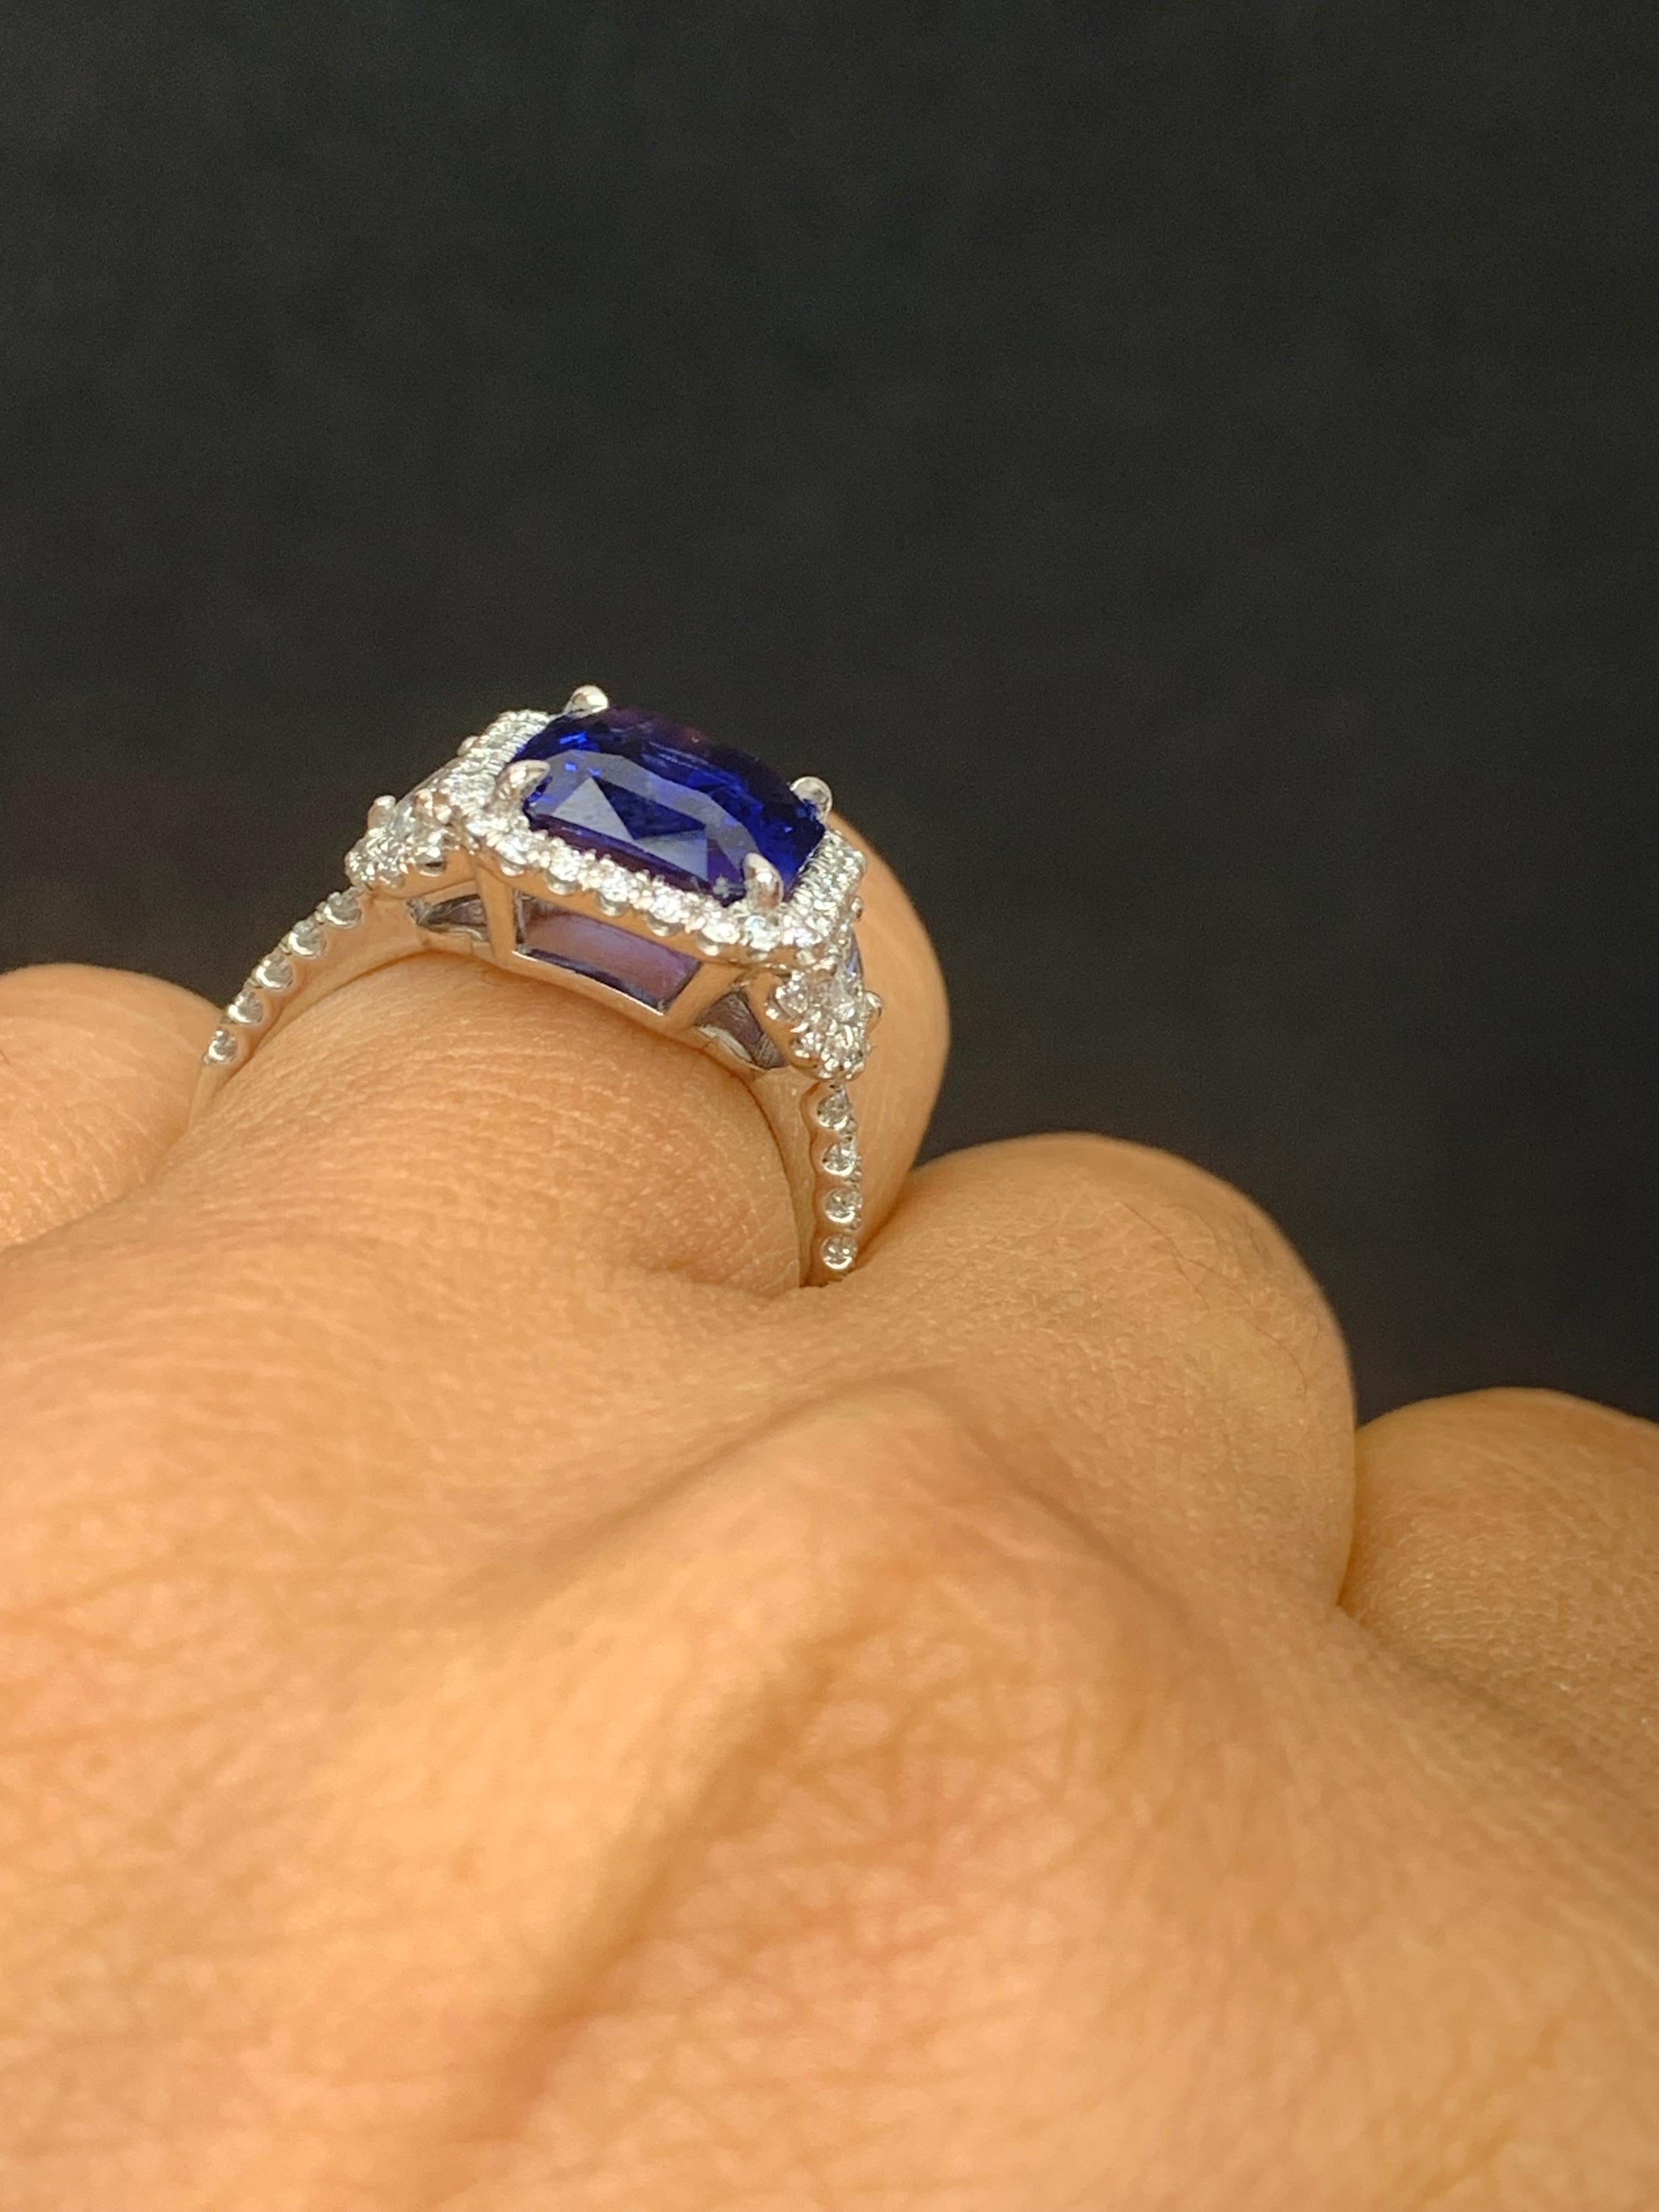 GIA Certified 4.41 Carat Emerald Cut Sapphire Diamond 3 Stone Ring in Platinum For Sale 2